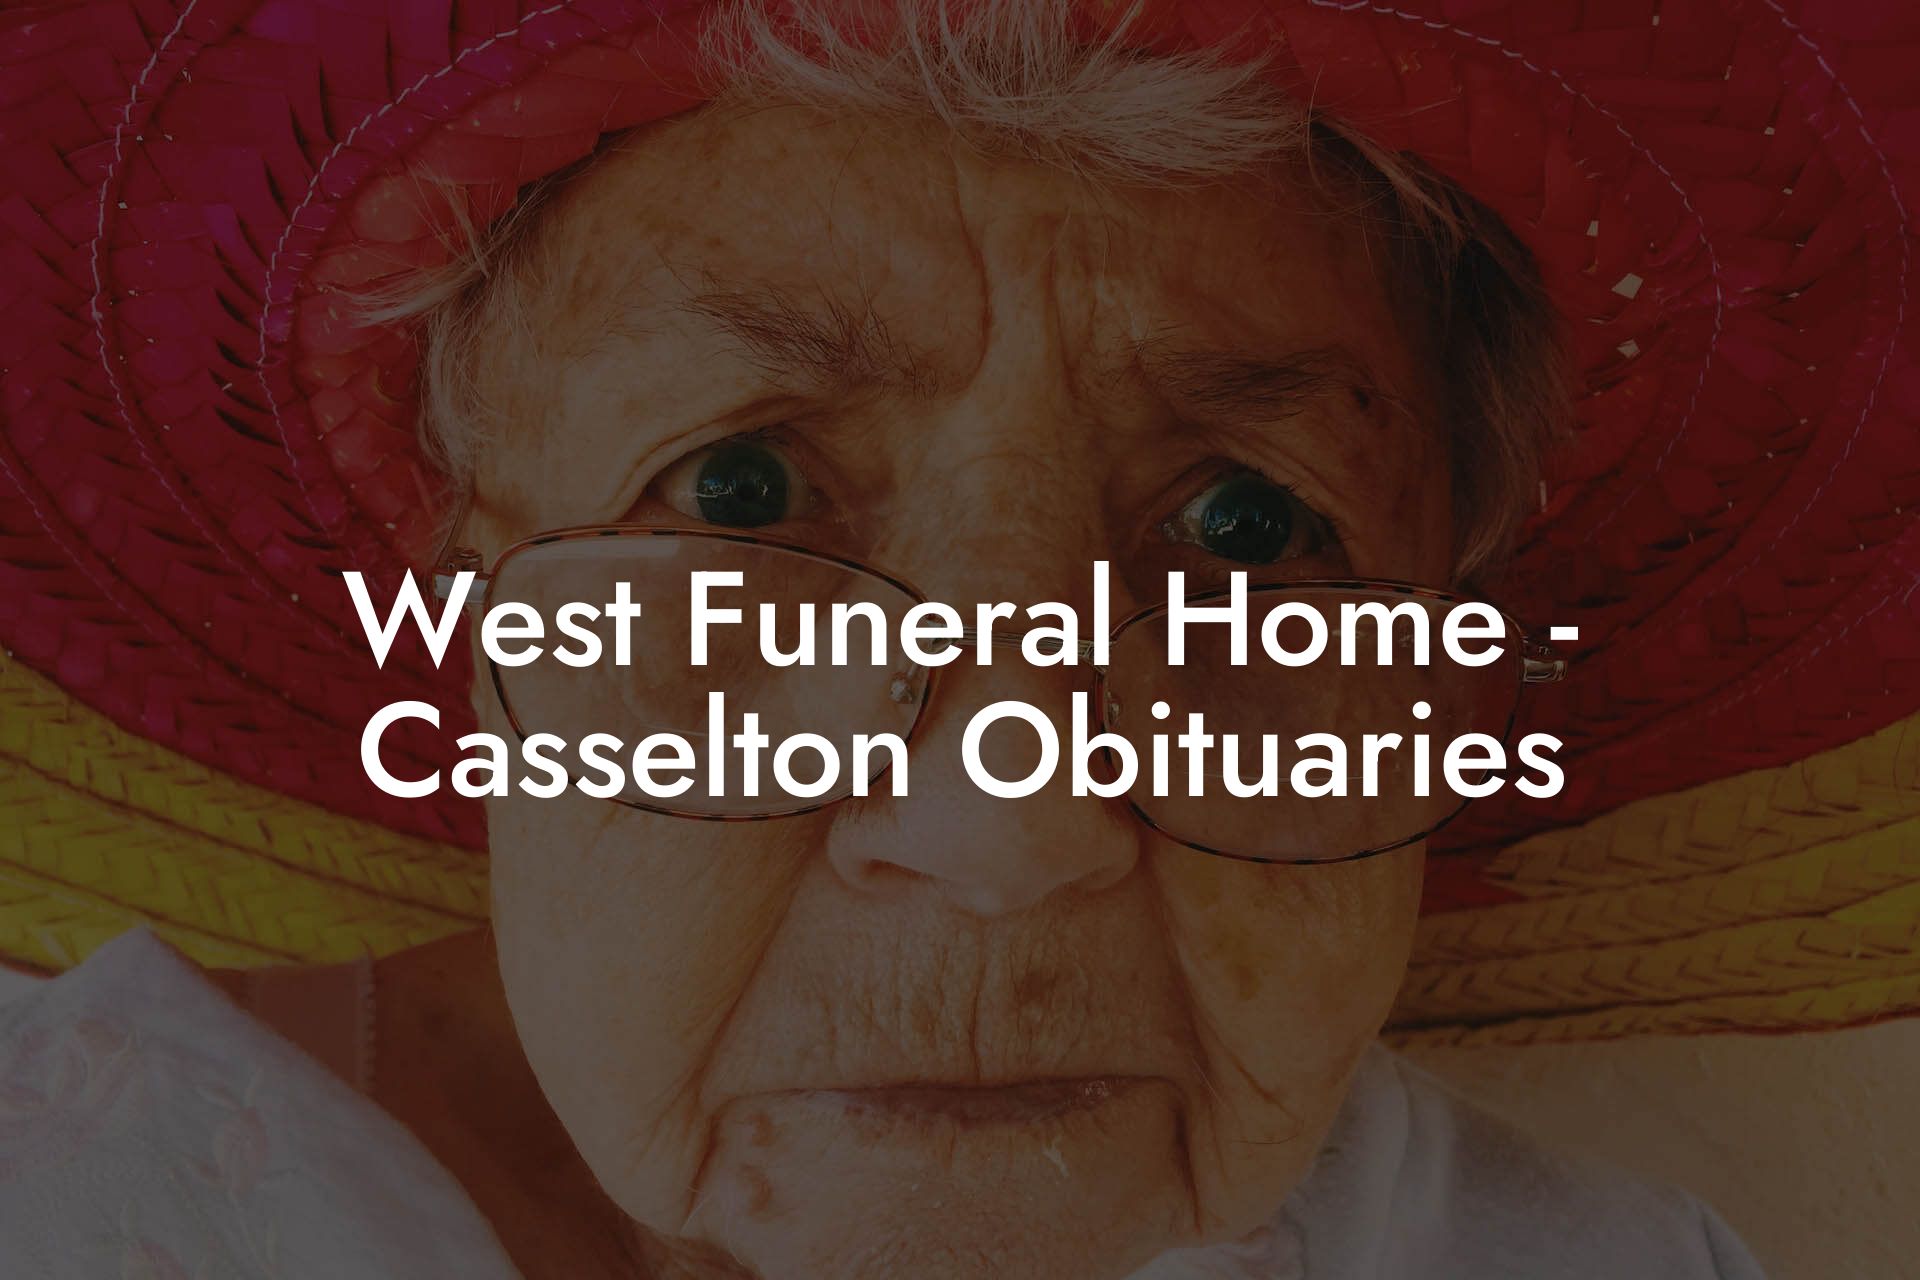 West Funeral Home - Casselton Obituaries